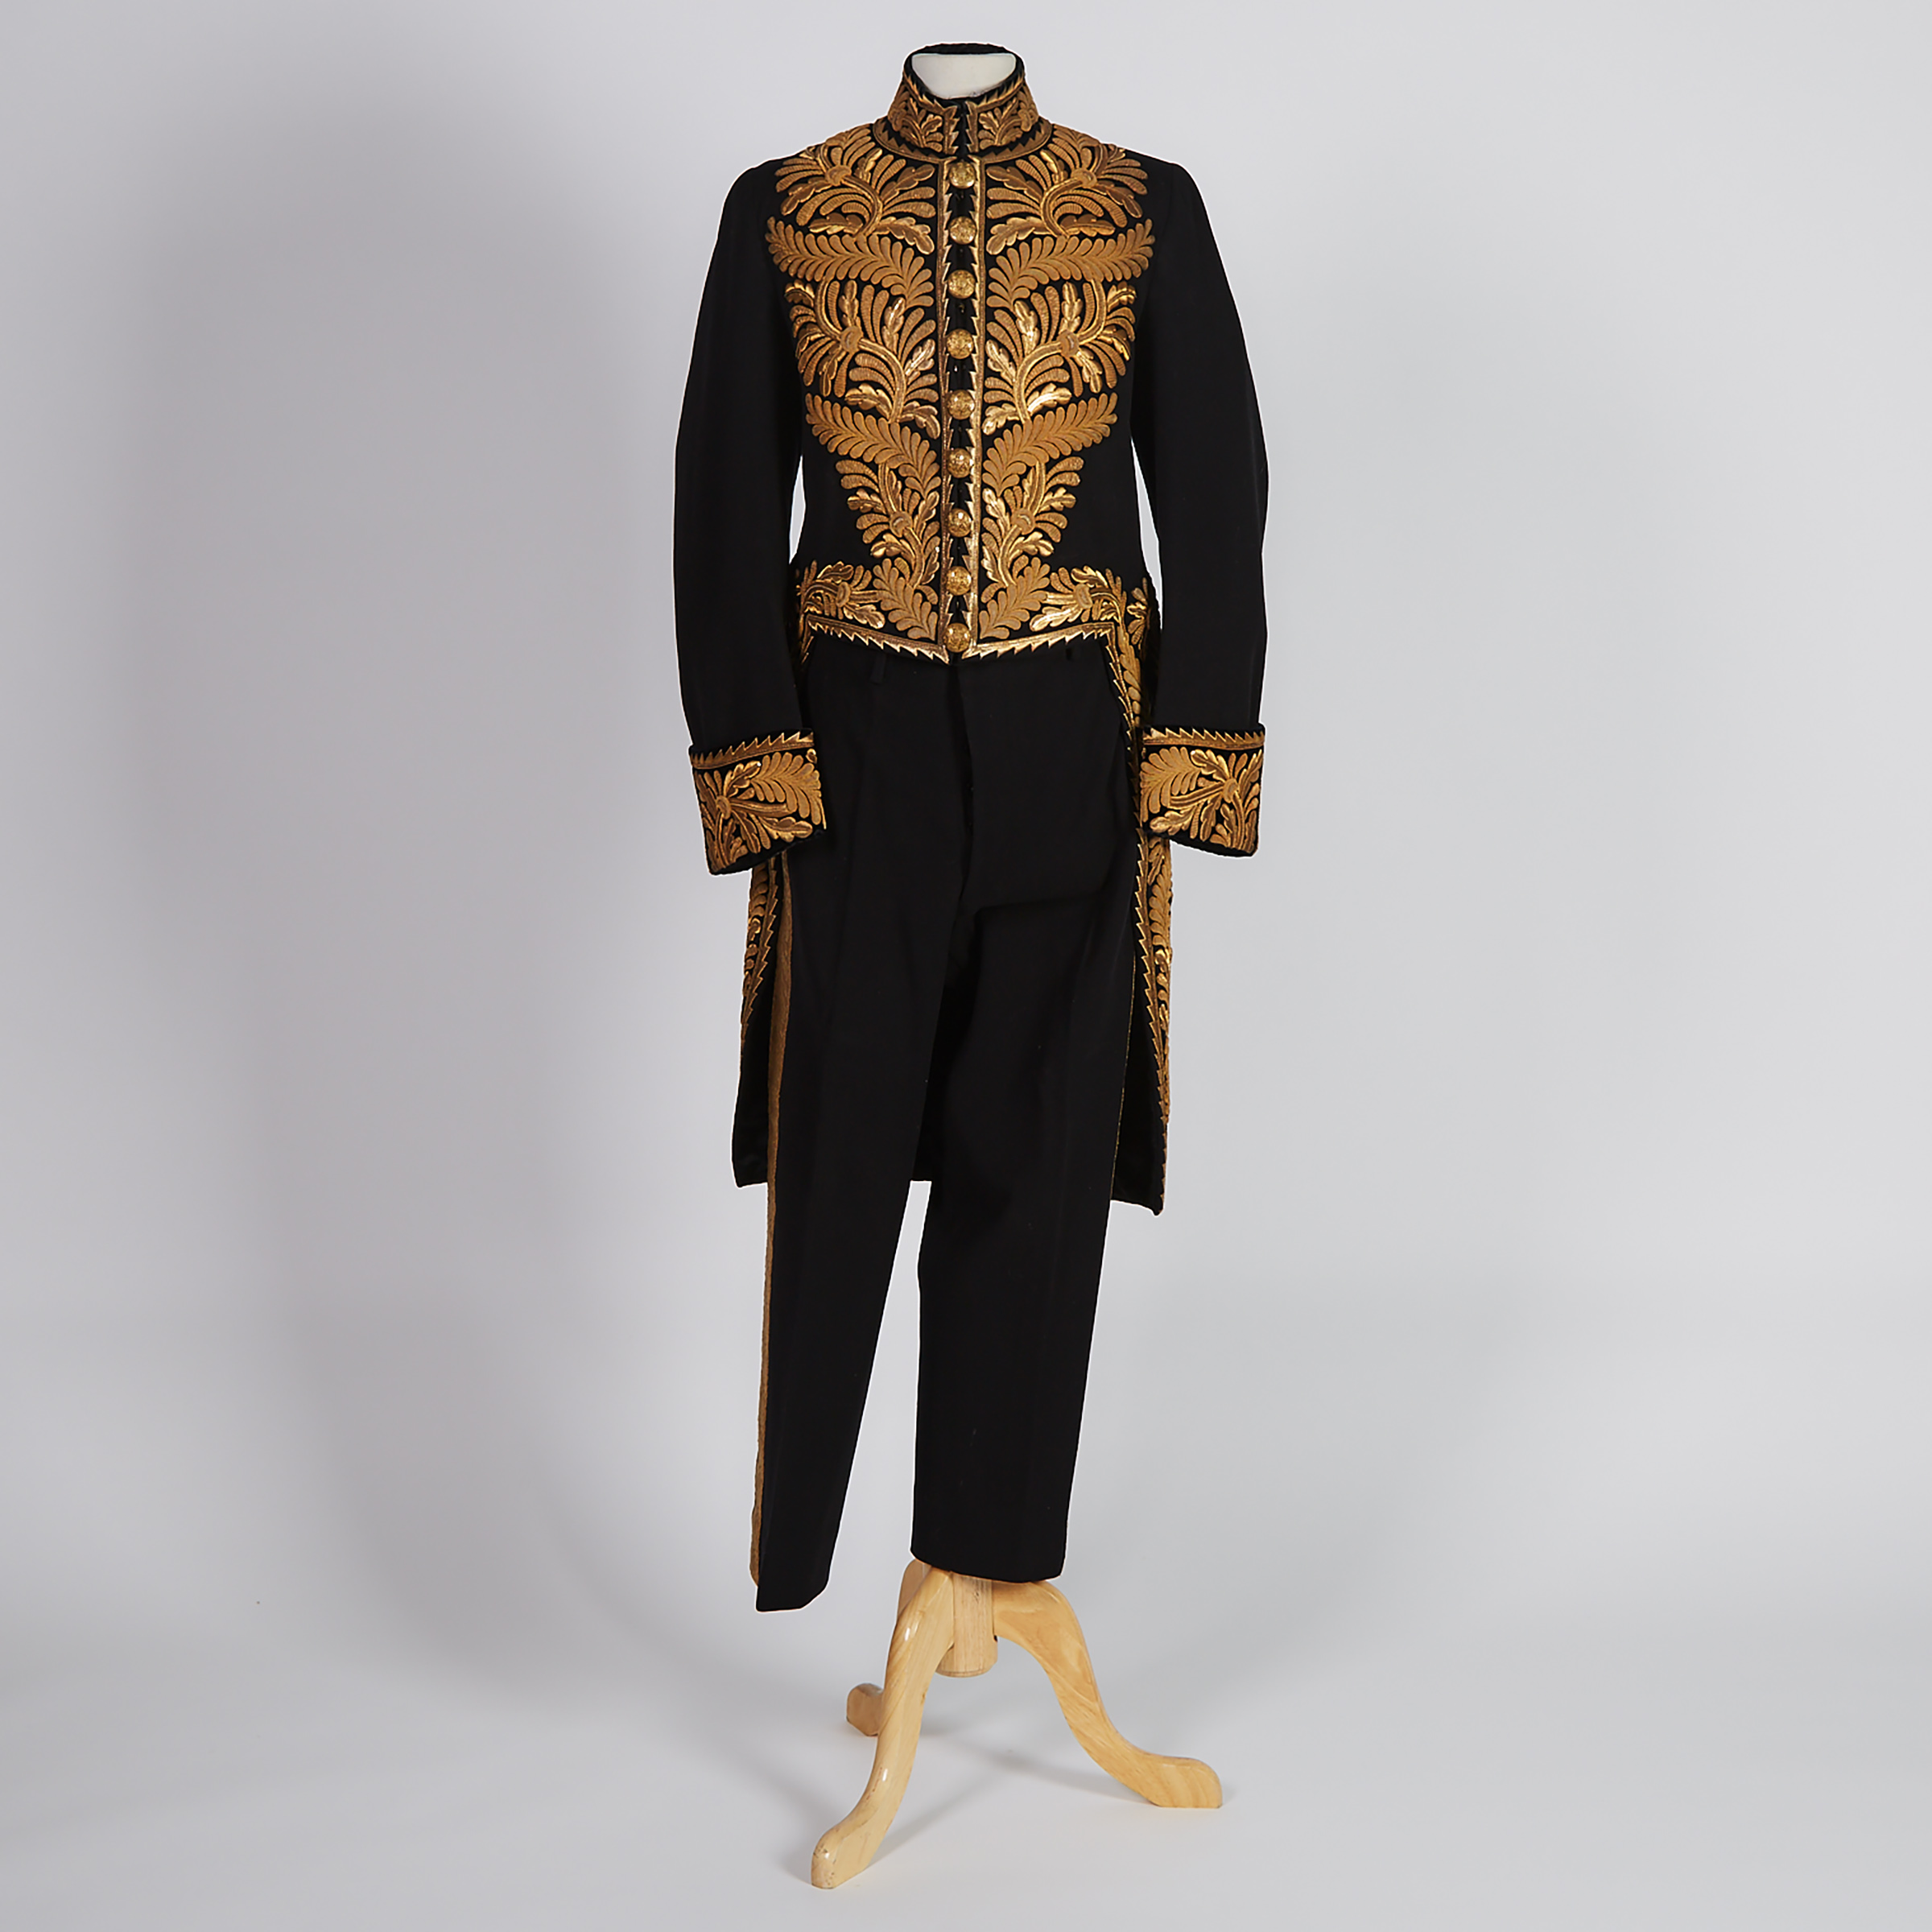 Quebec Lieutenant Governor Henry Carroll’s Civil Uniform, R.J. Inglis Ltd., Montreal, 1929